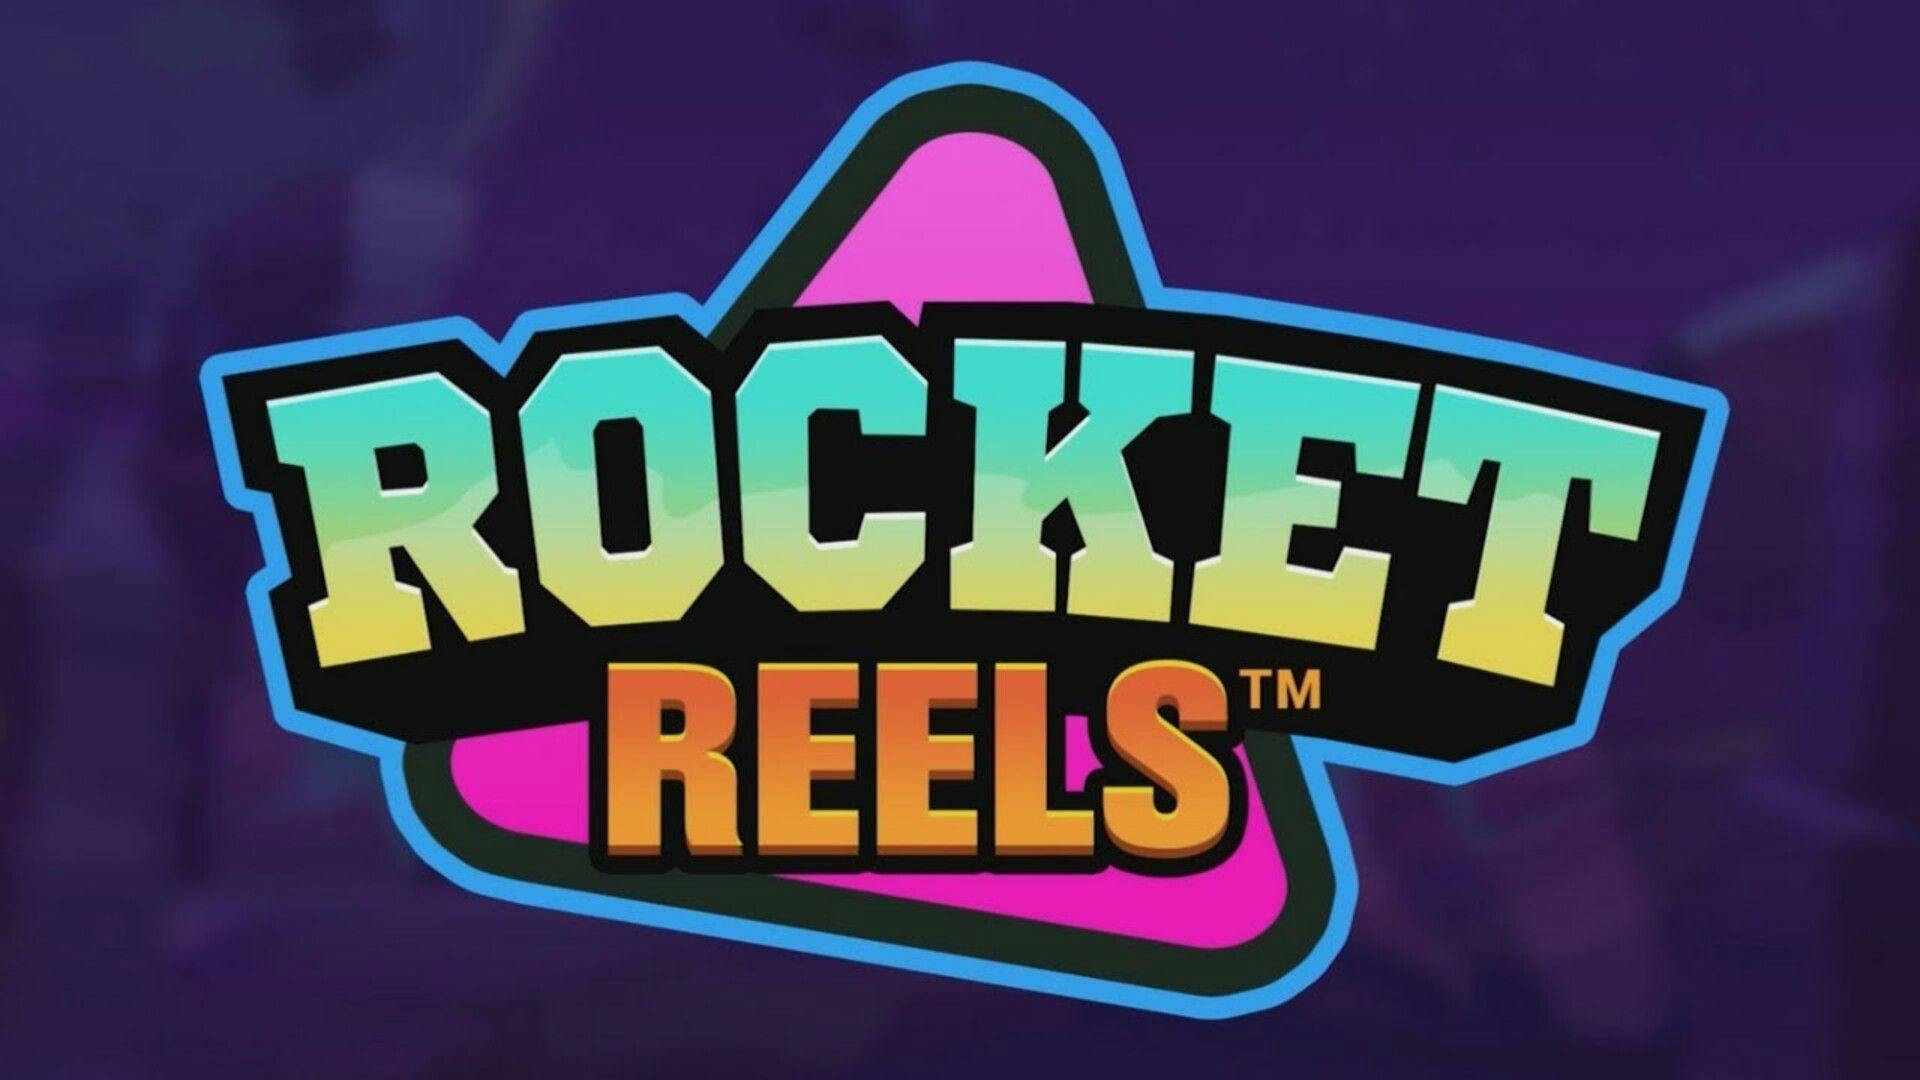 Rocket Reels Slot Machine Online Free Game Play